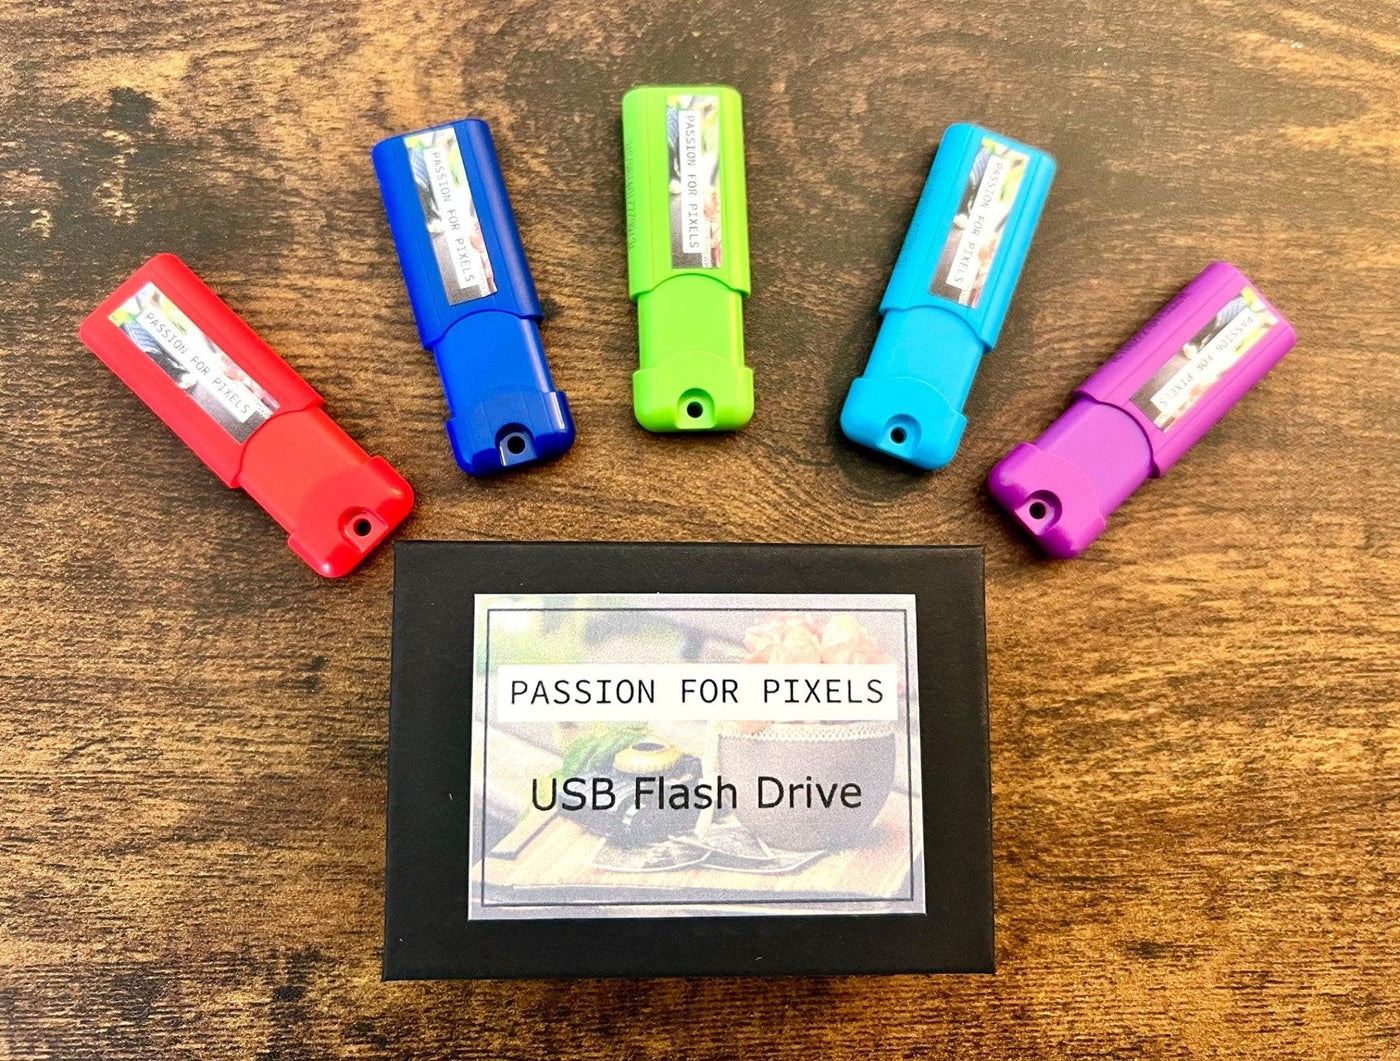 Extra USB Flash Drive Stick - Great Gift Idea! - PassionForPixels